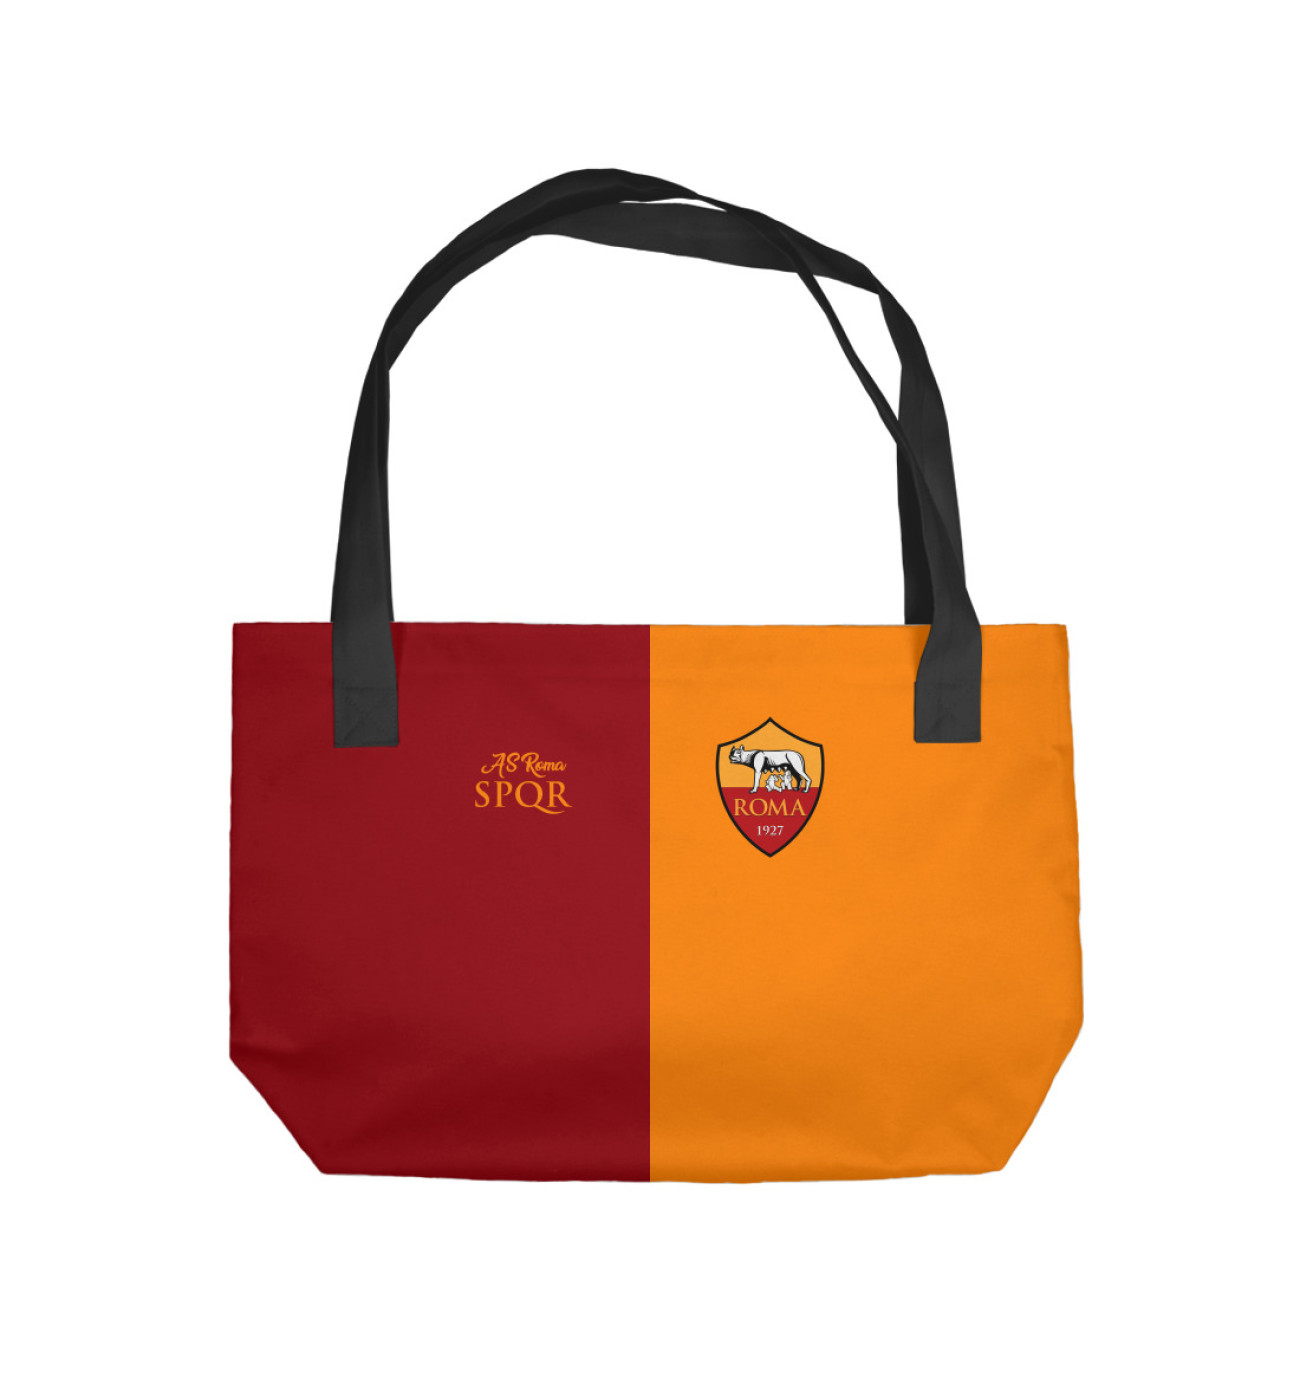  Пляжная сумка Рома, артикул: FTO-273359-sup